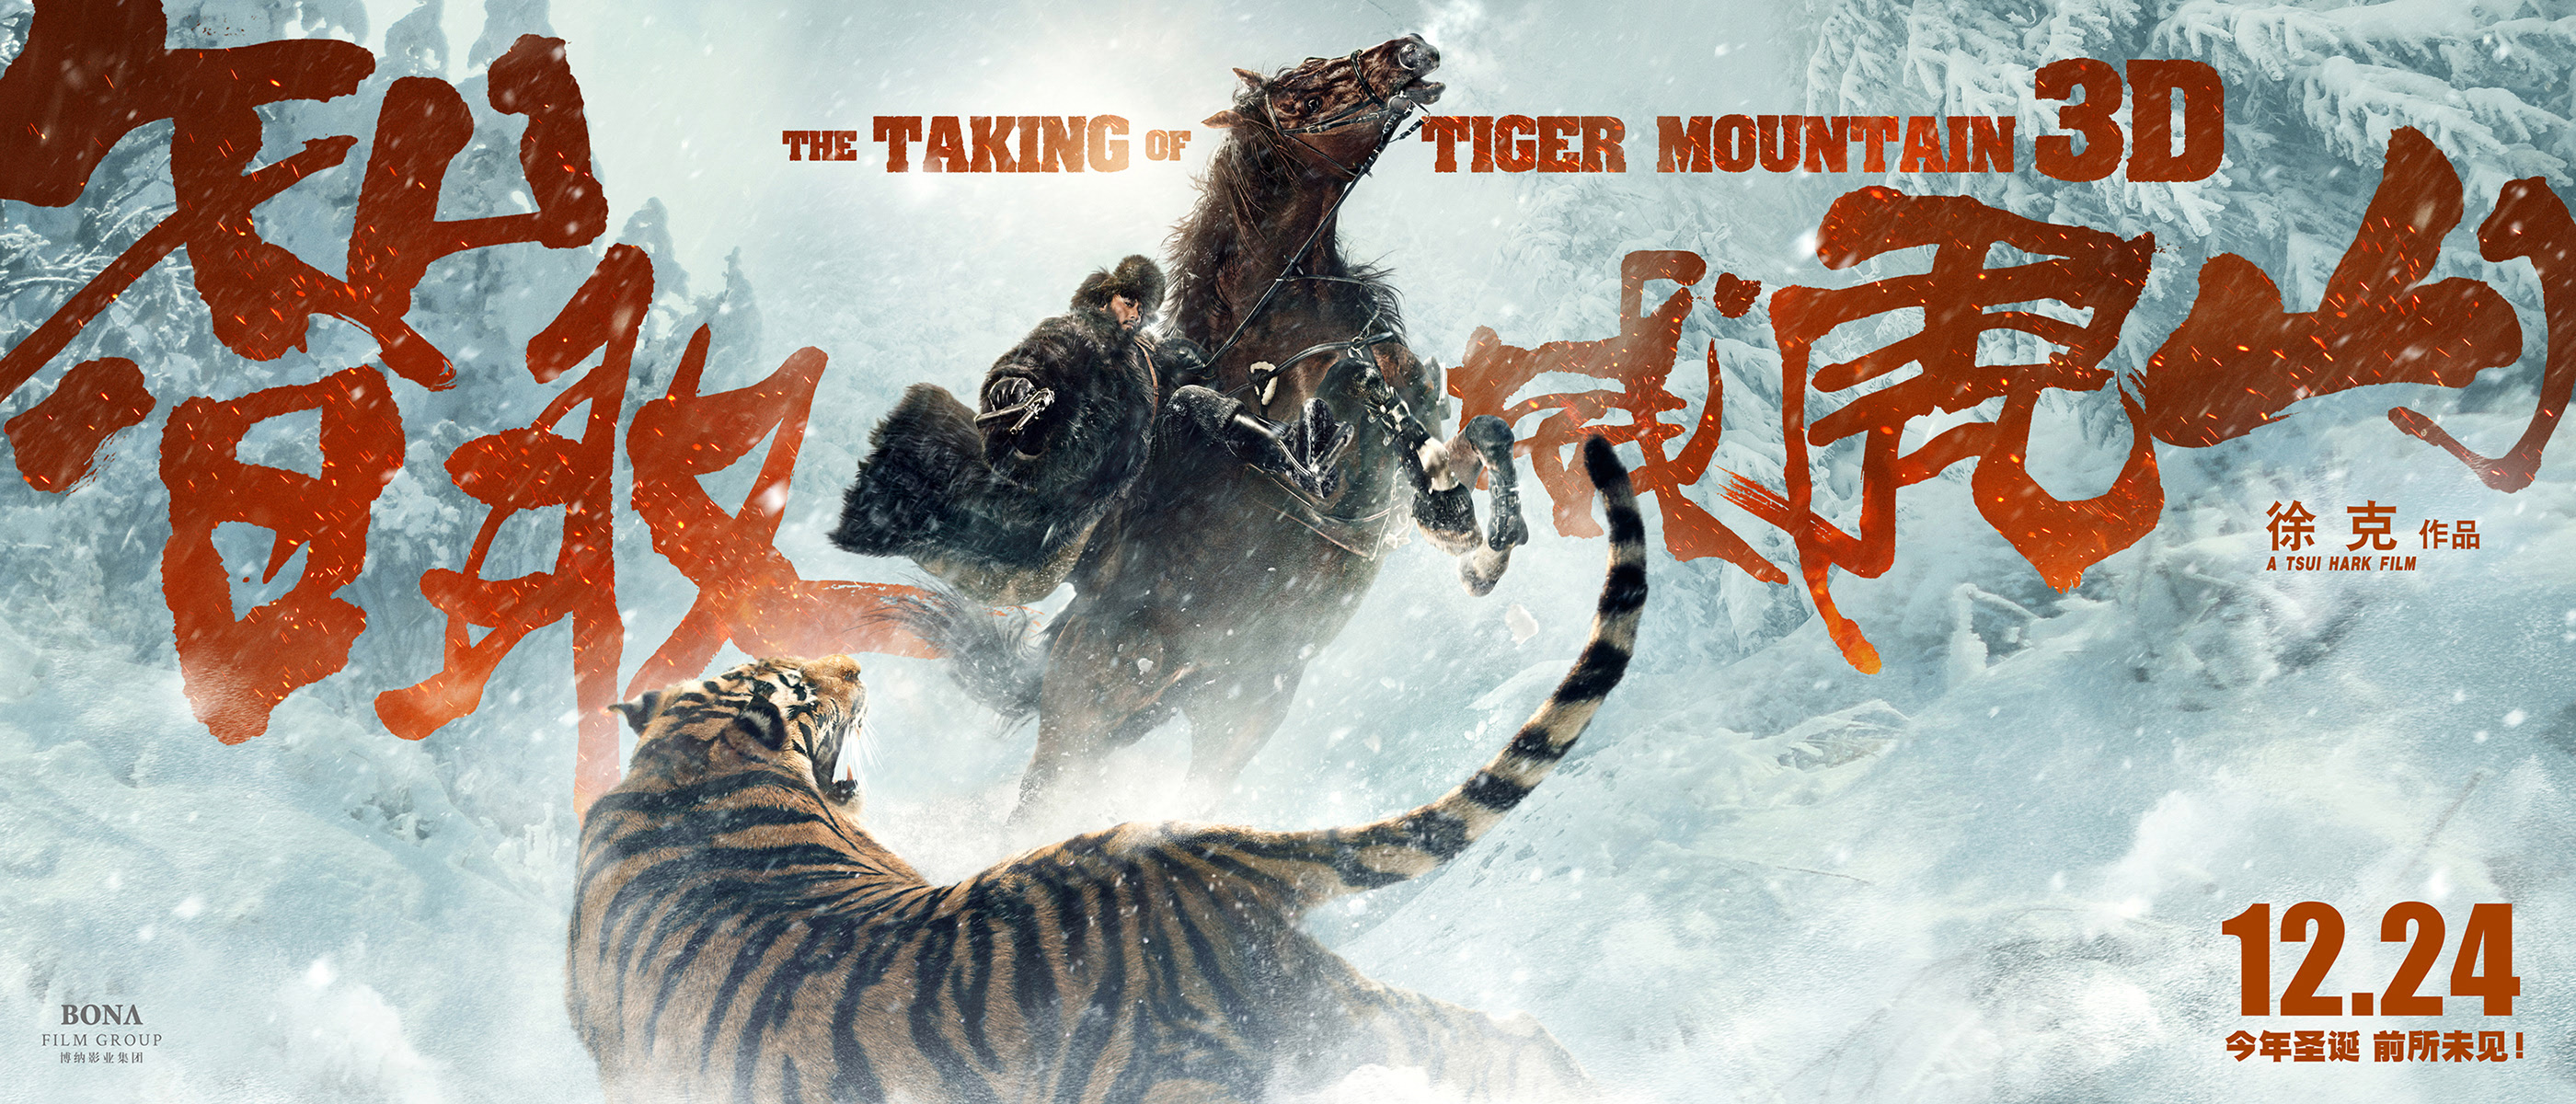 Захват горы тигра 2014. Ловкий захват тигровой горы.